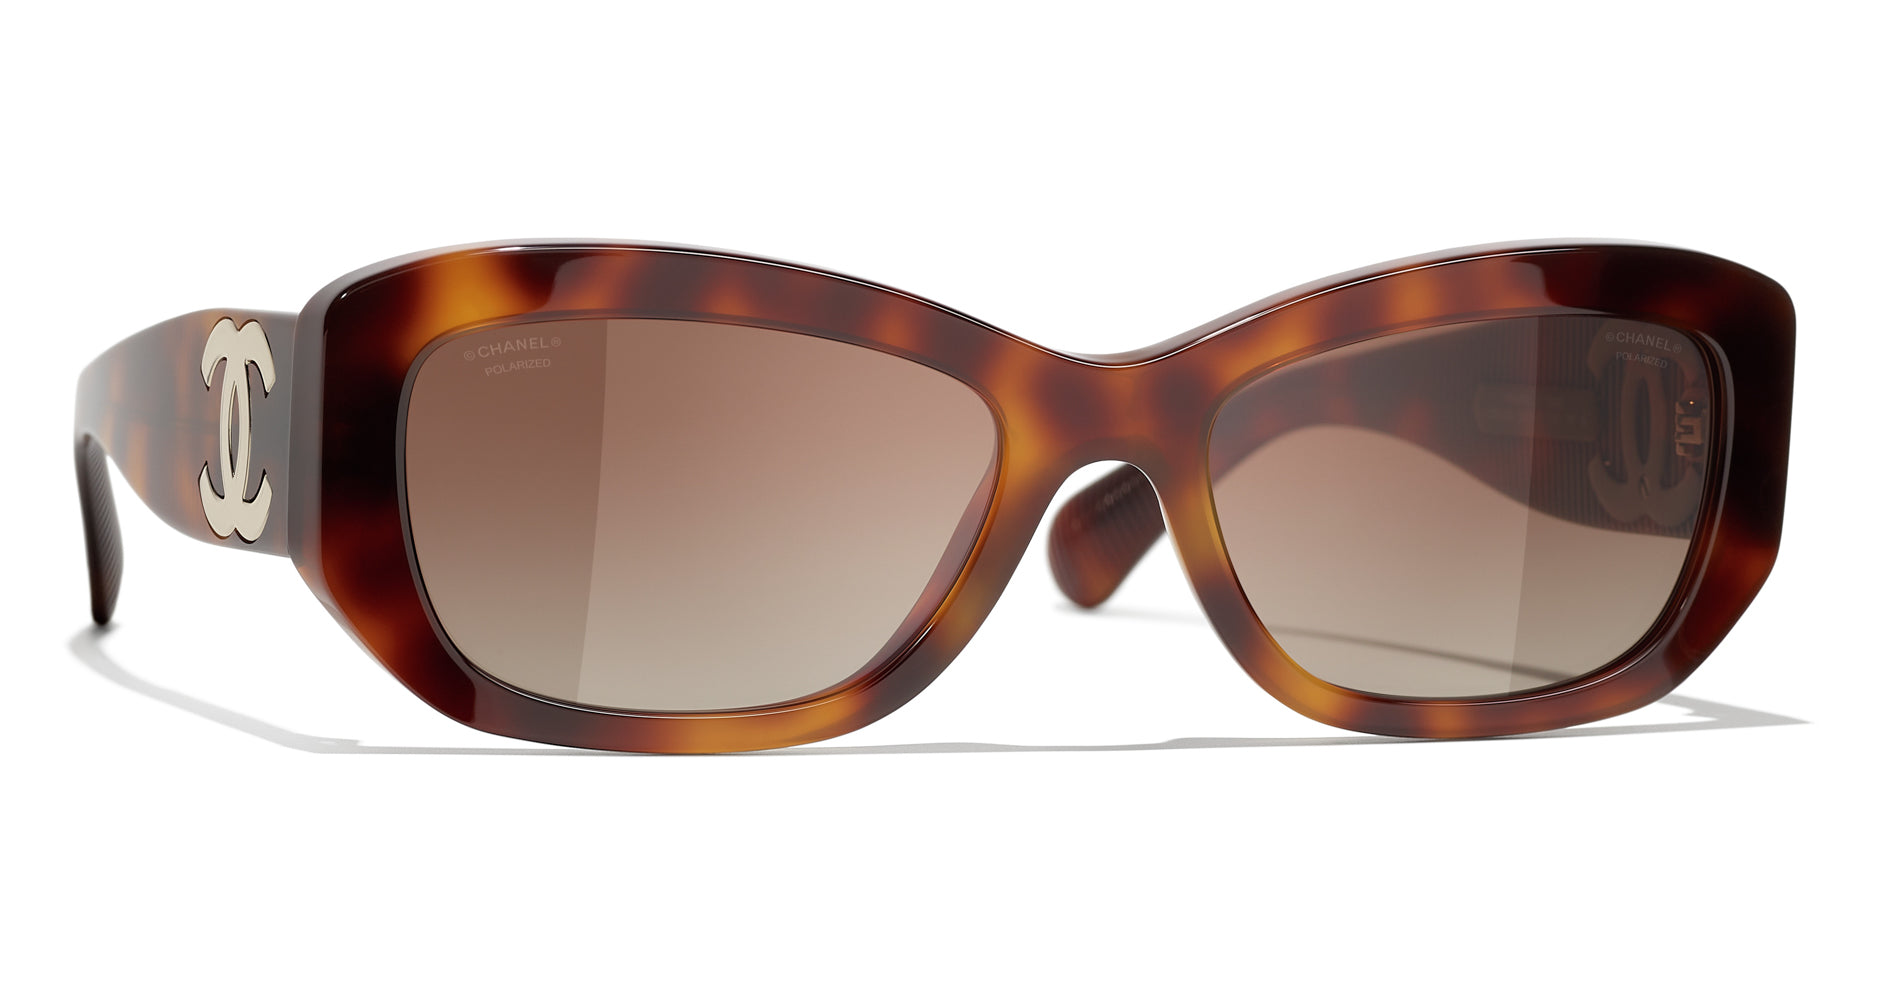 CHANEL 5493 Rectangle Sunglasses | Fashion Eyewear